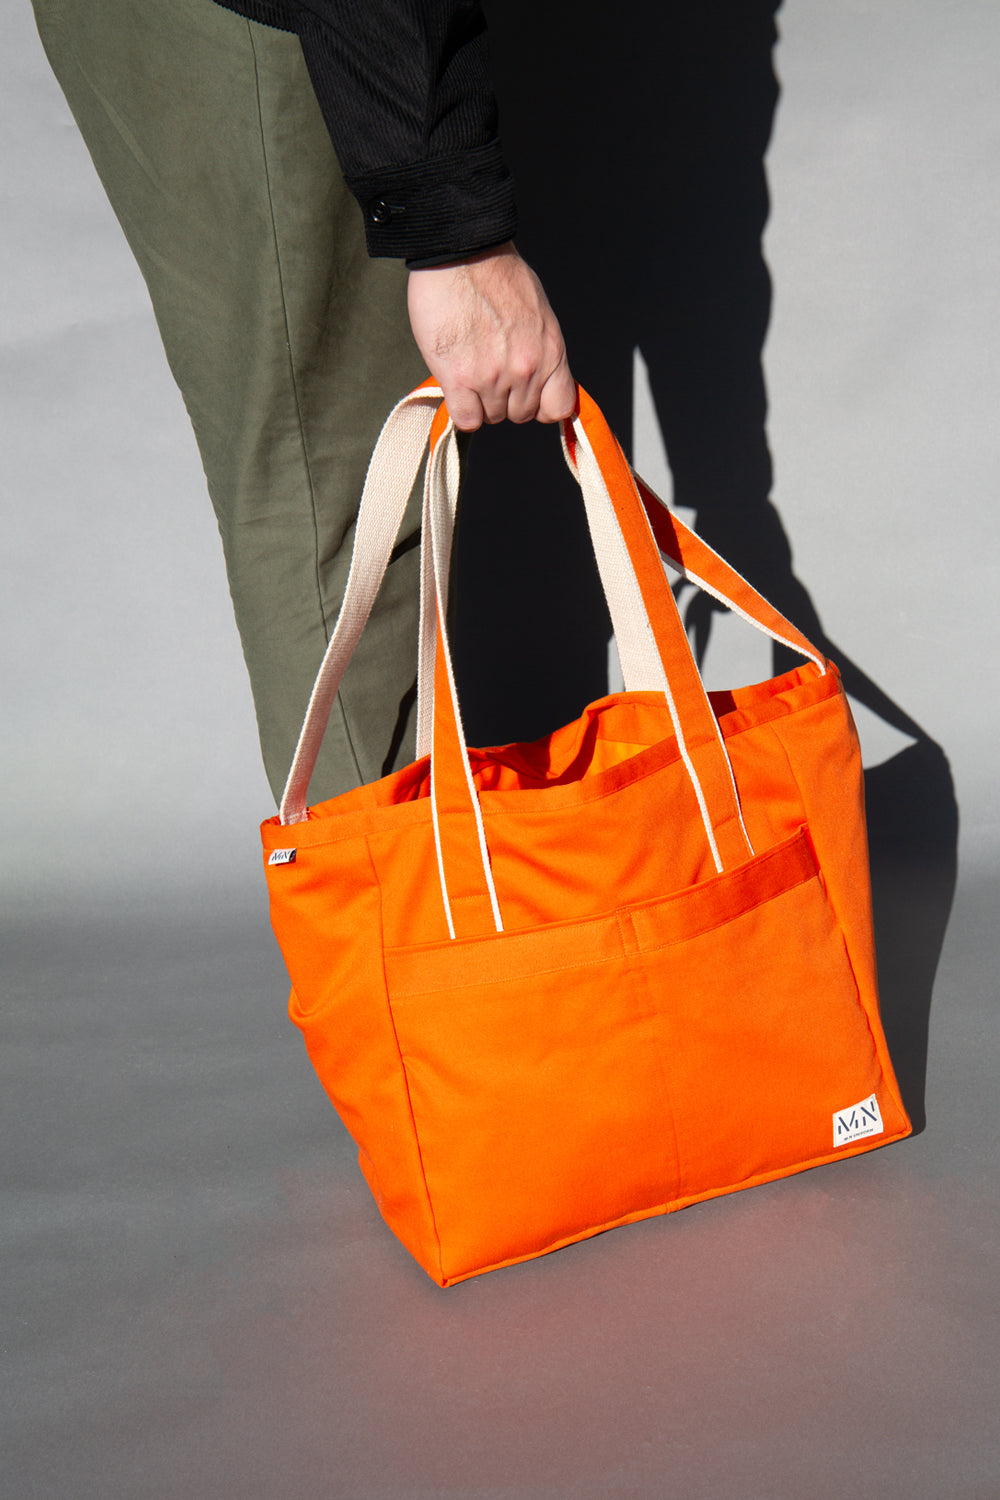 M.N Orange Carryall Bag